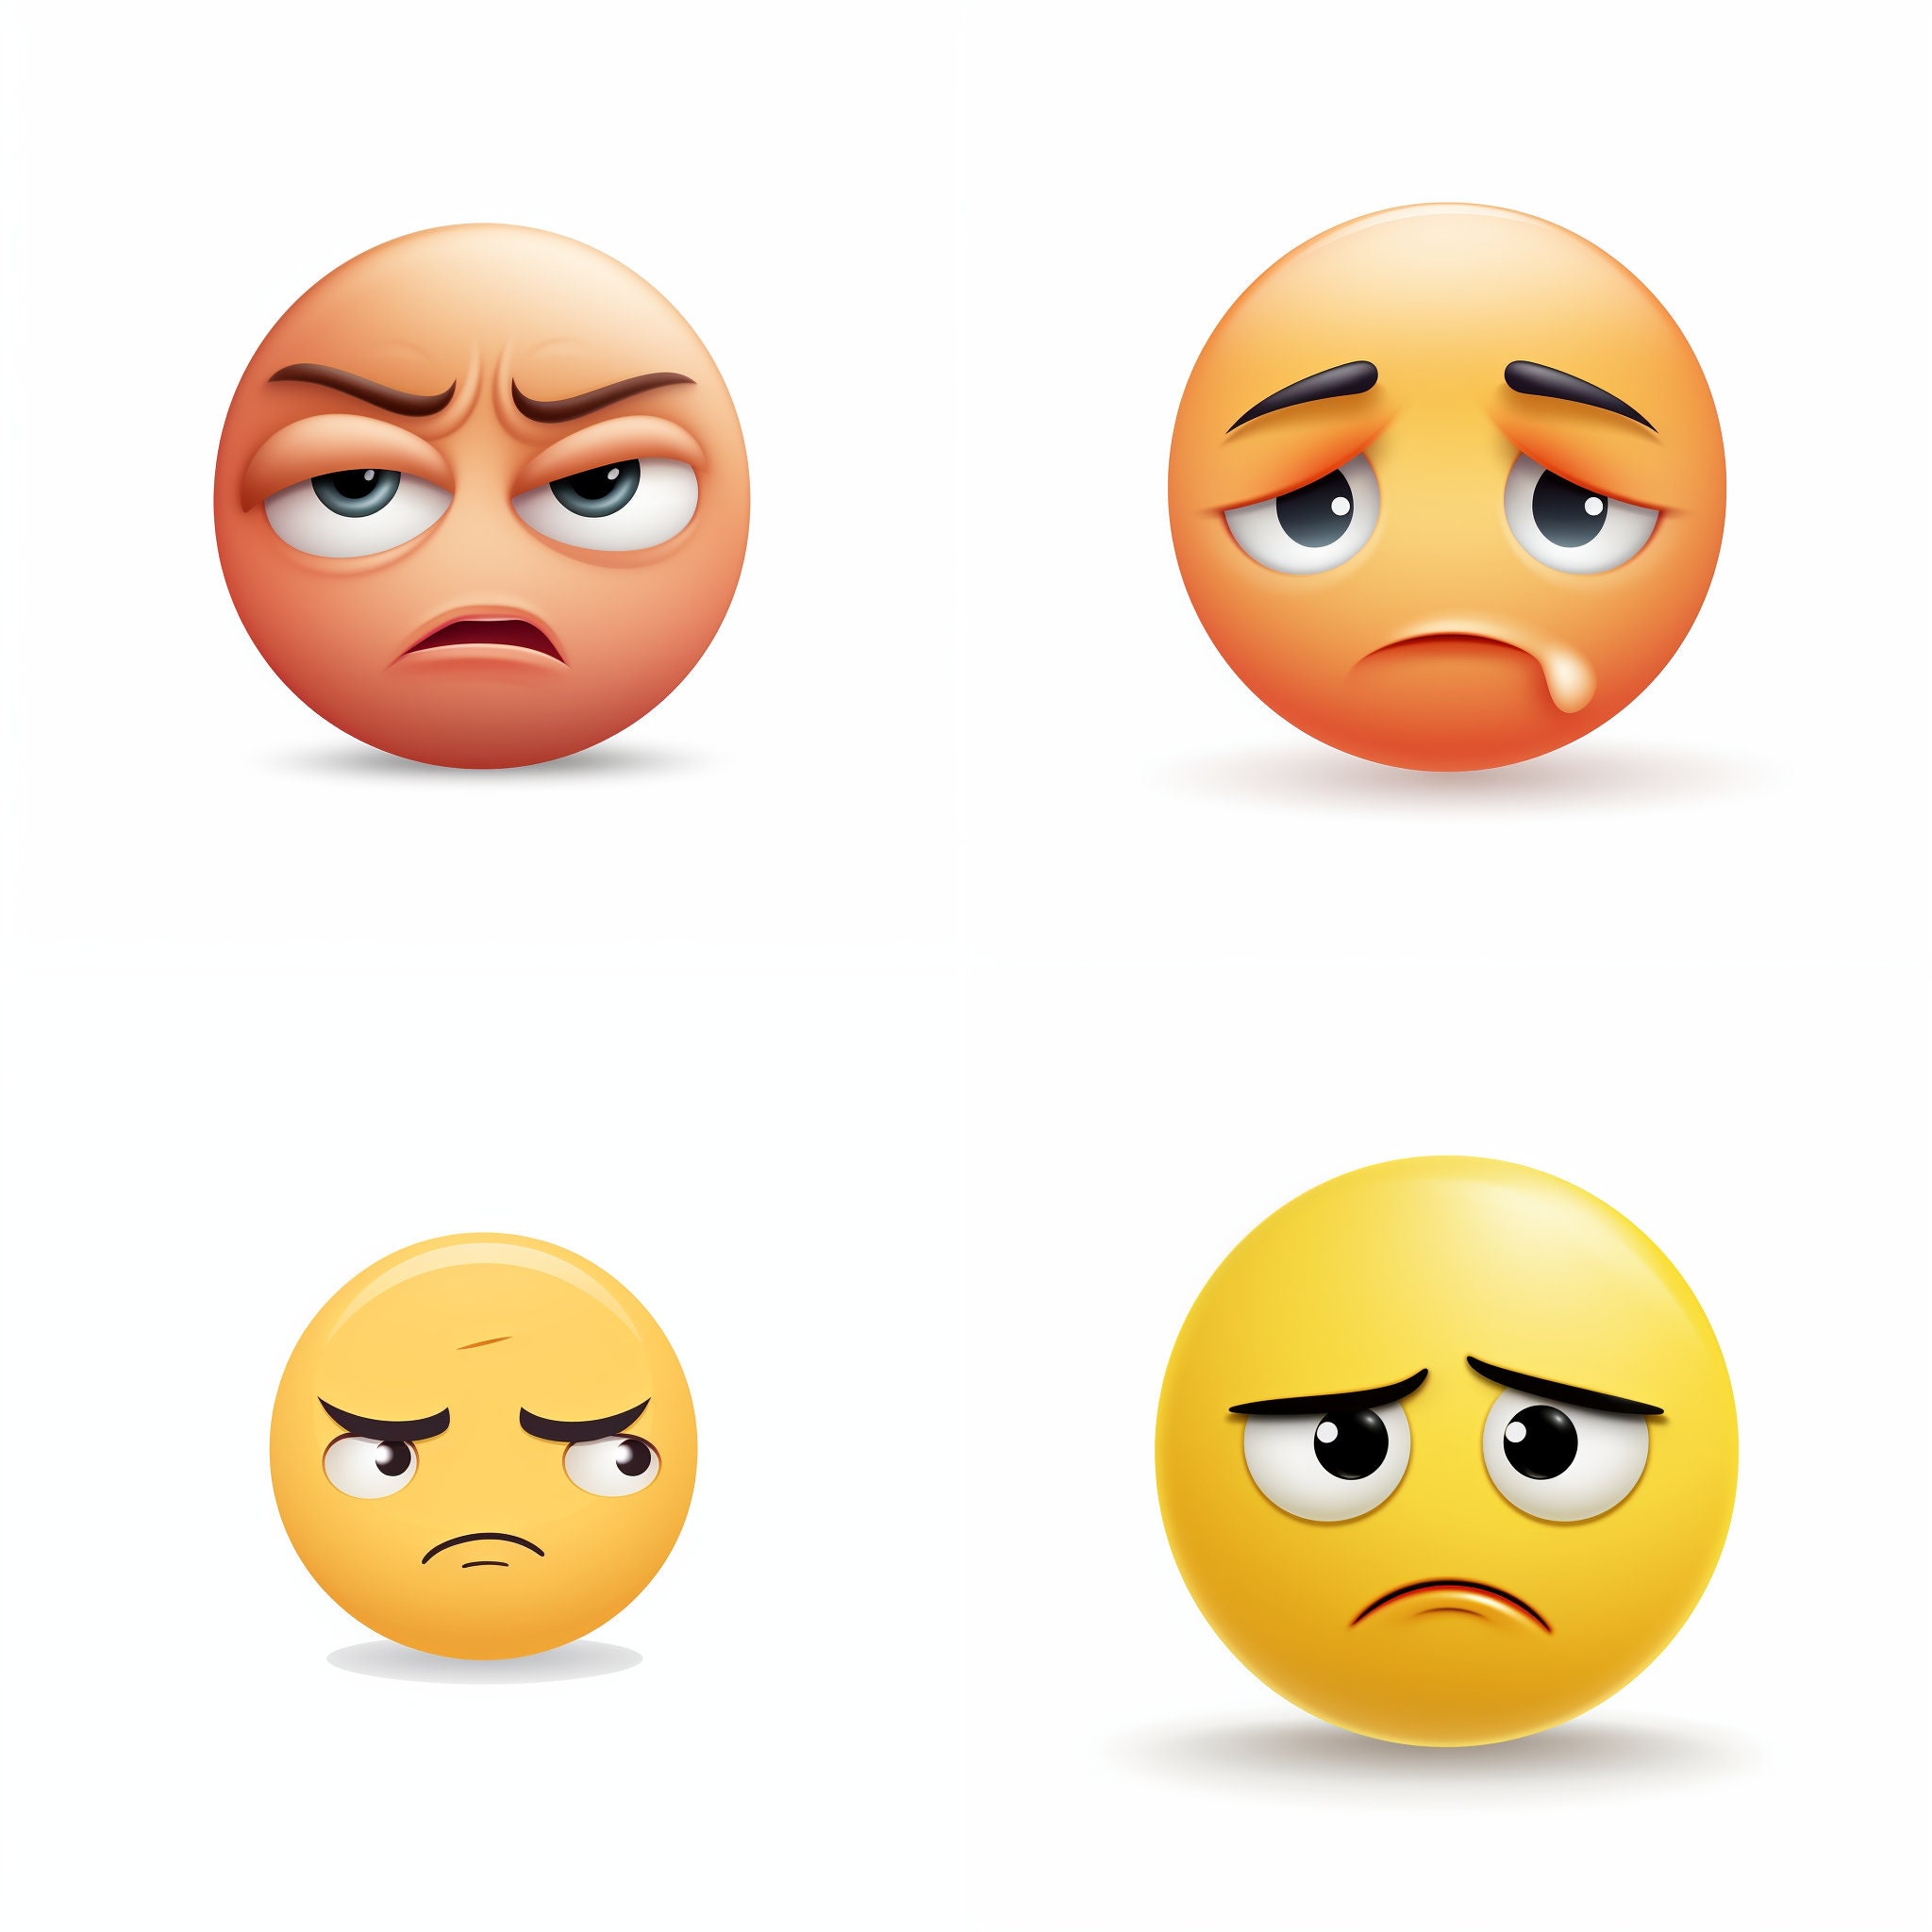 Depressed Sad Troll face MEME | Photographic Print